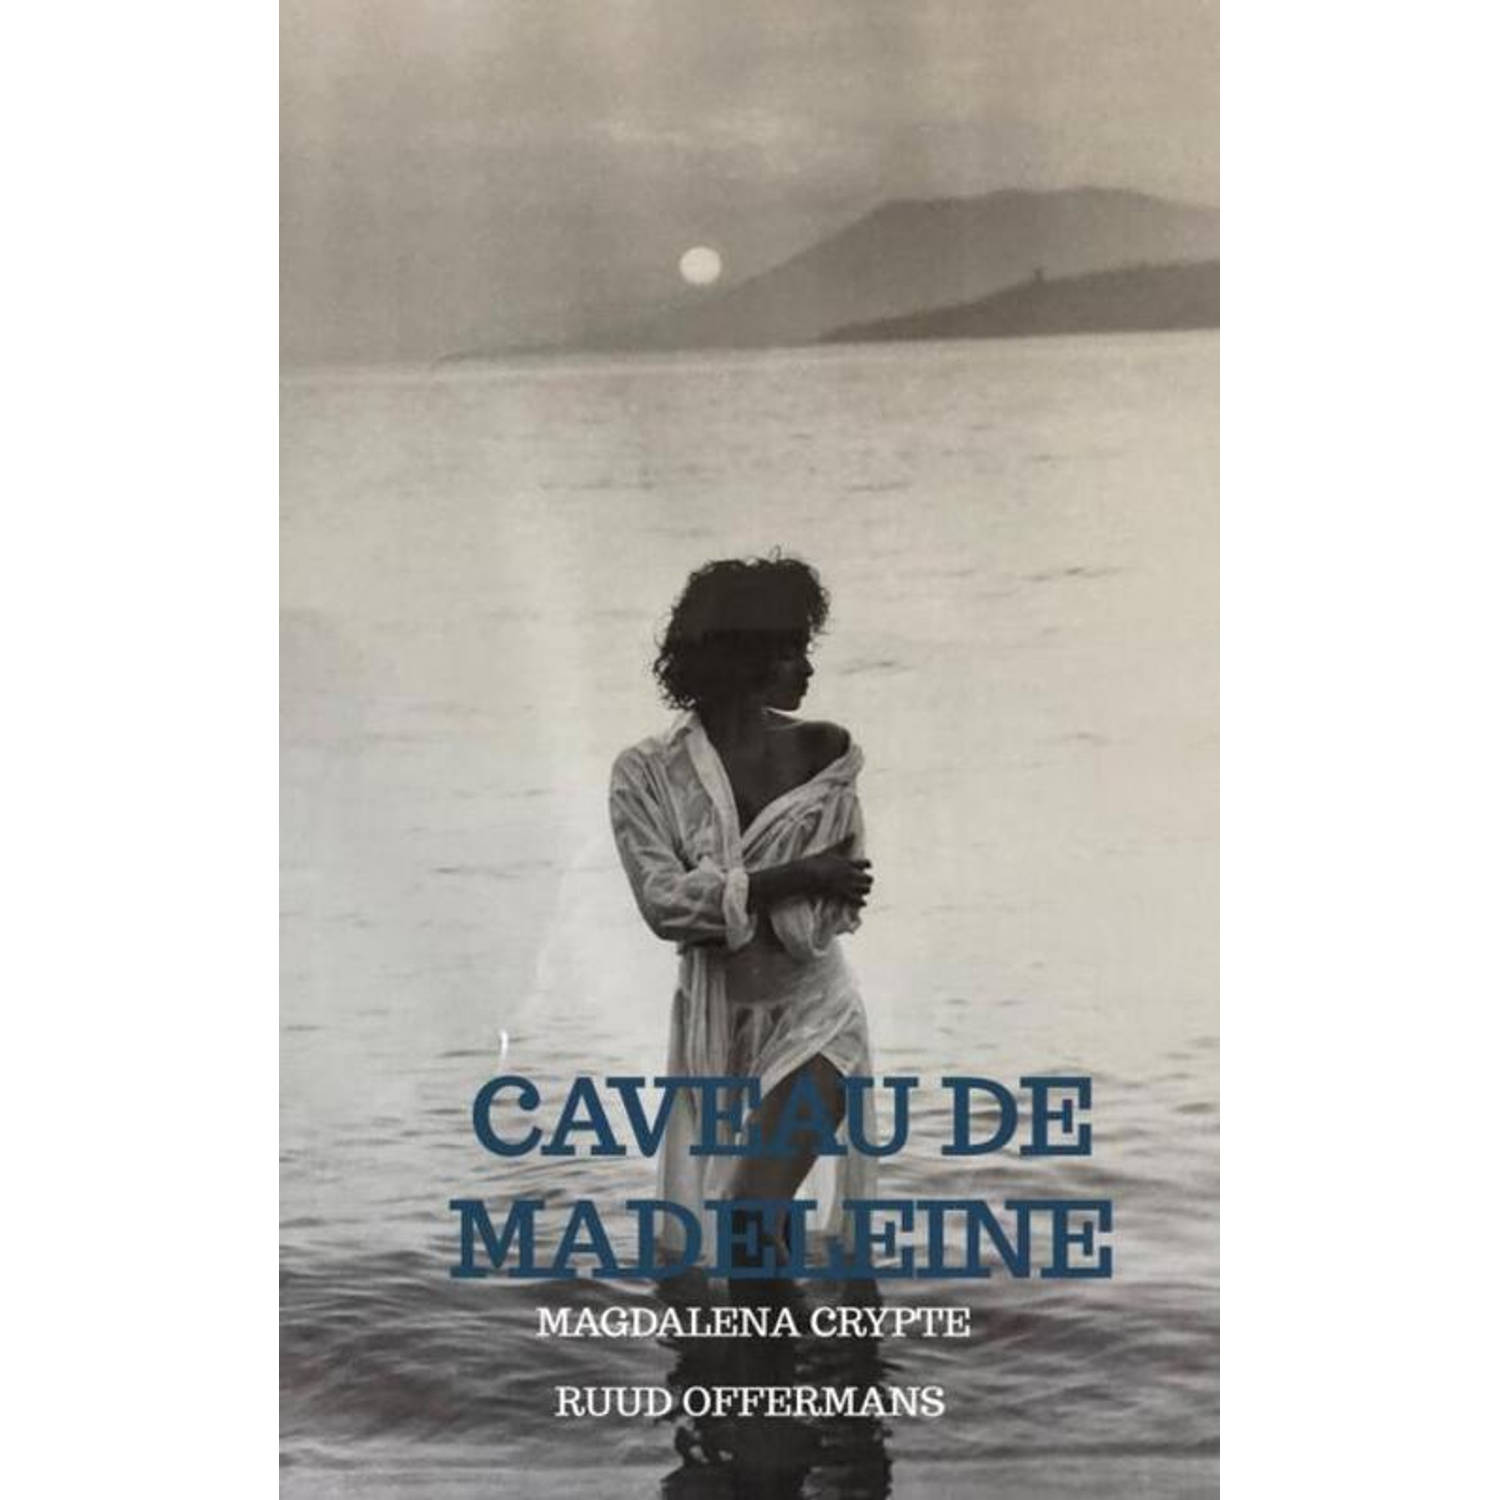 Caveau de Madeleine. Magdalena crypte, Ruud Offermans, Paperback